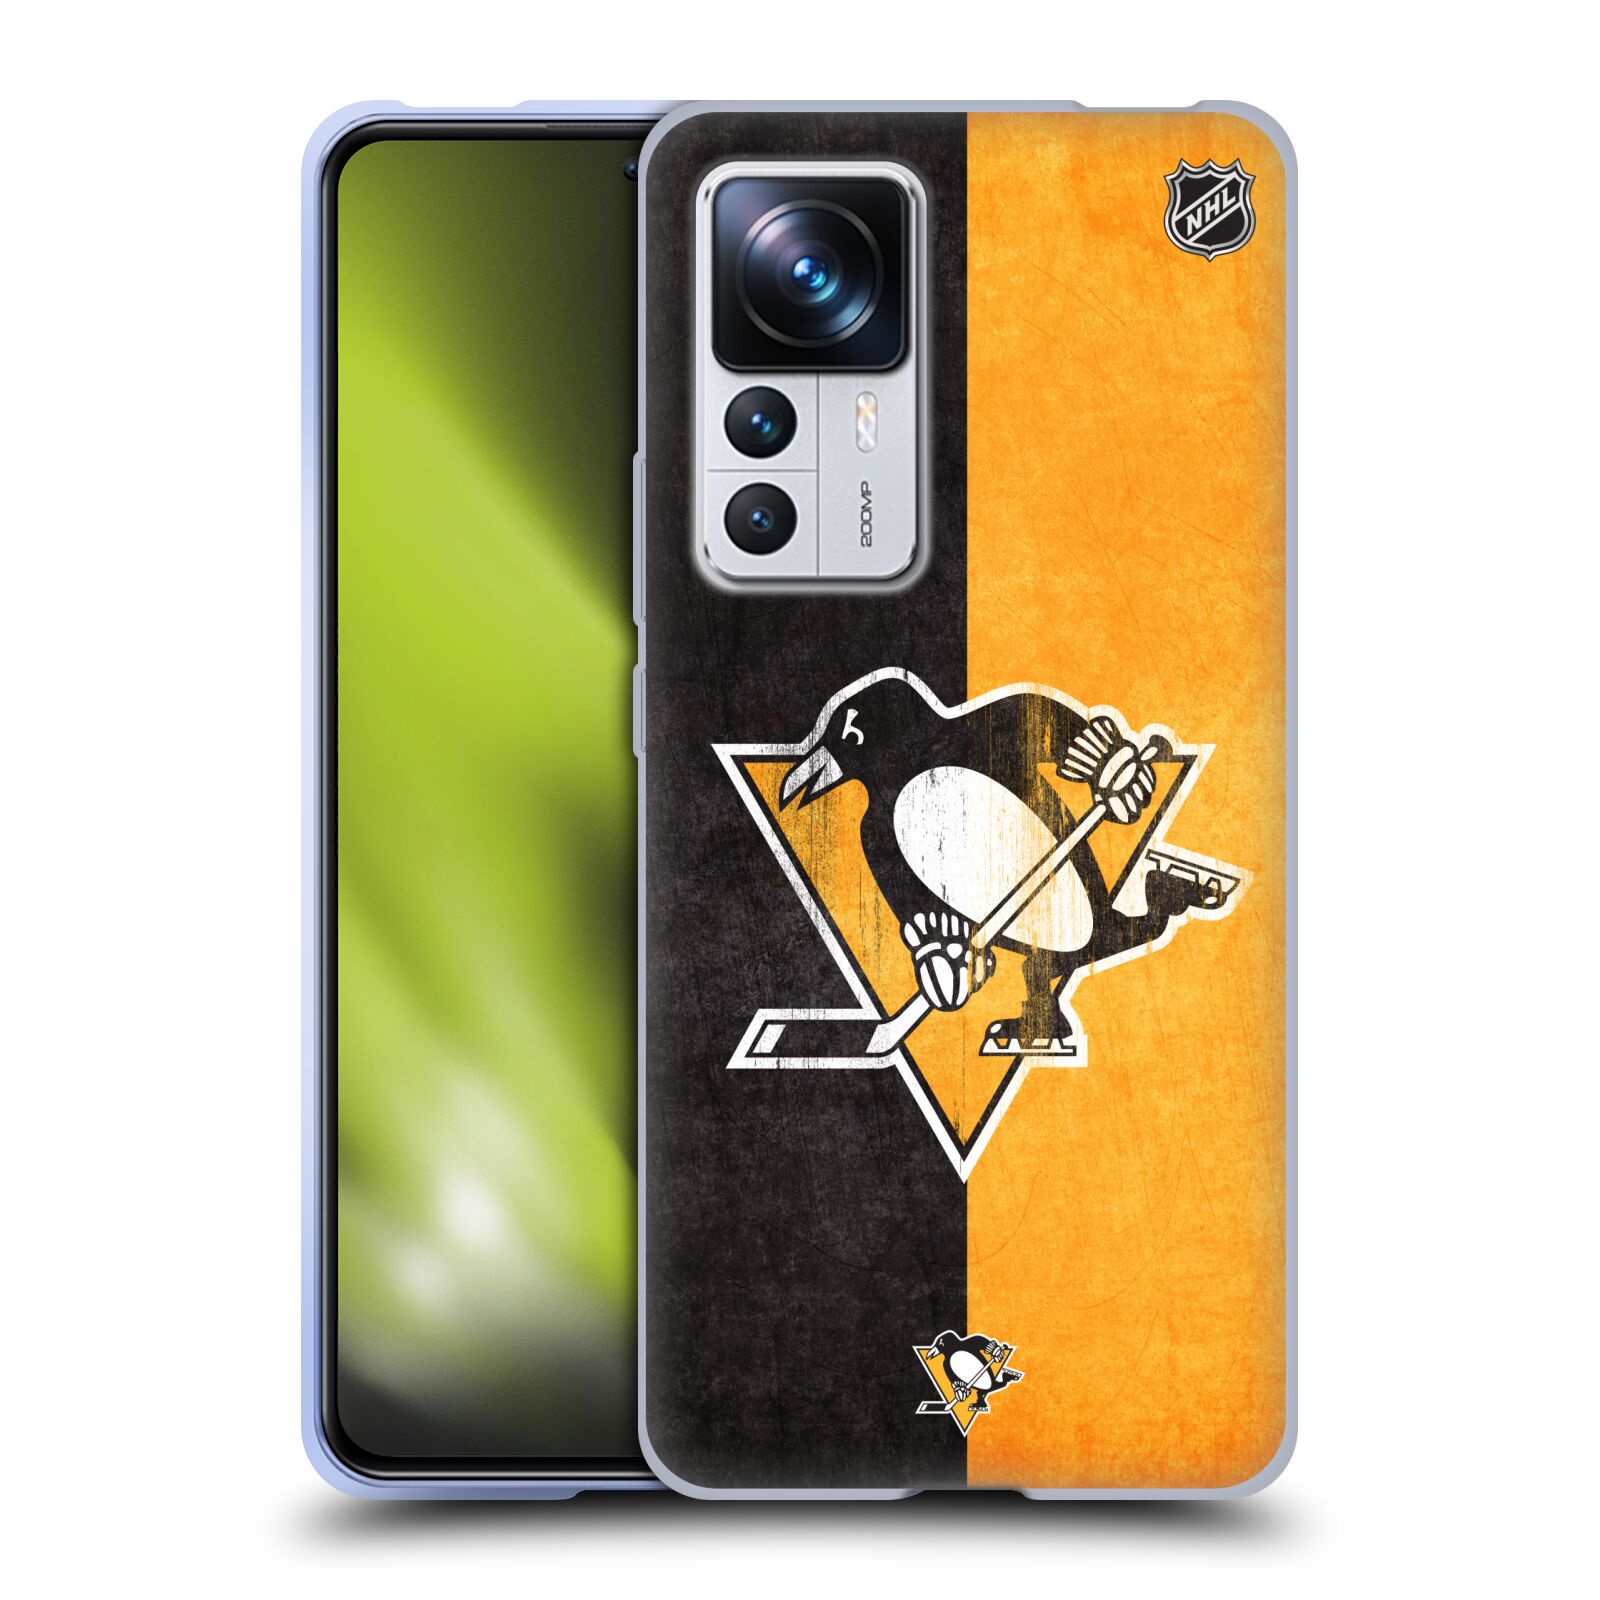 Silikonové pouzdro na mobil Xiaomi 12T / 12T Pro - NHL - Půlené logo Pittsburgh Penguins (Silikonový kryt, obal, pouzdro na mobilní telefon Xiaomi 12T / 12T Pro s licencovaným motivem NHL - Půlené logo Pittsburgh Penguins)